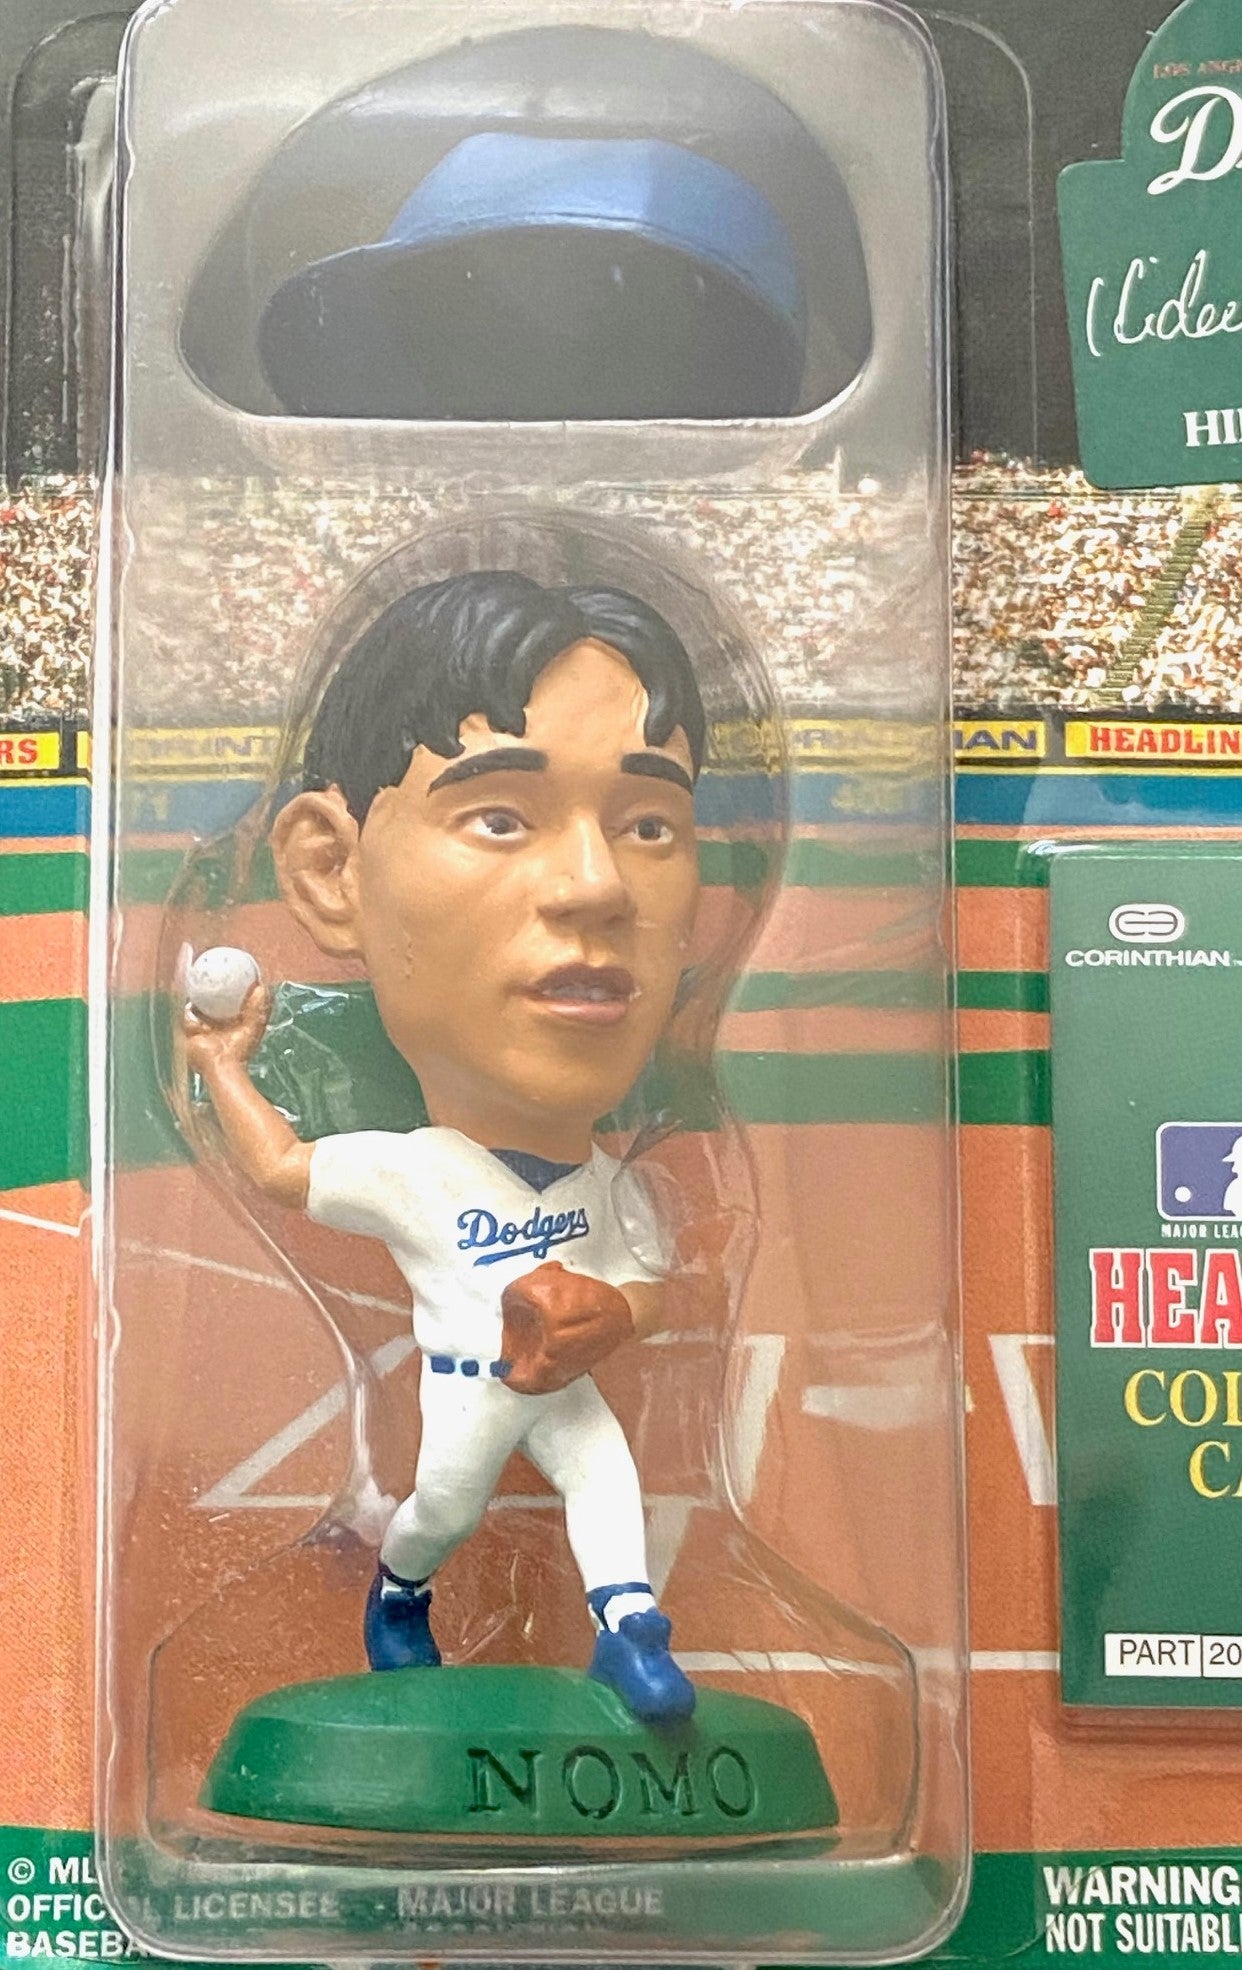 Hideo Nomo 1996 MLB Los Angeles Dodgers Headliner Figurine by Corinthian